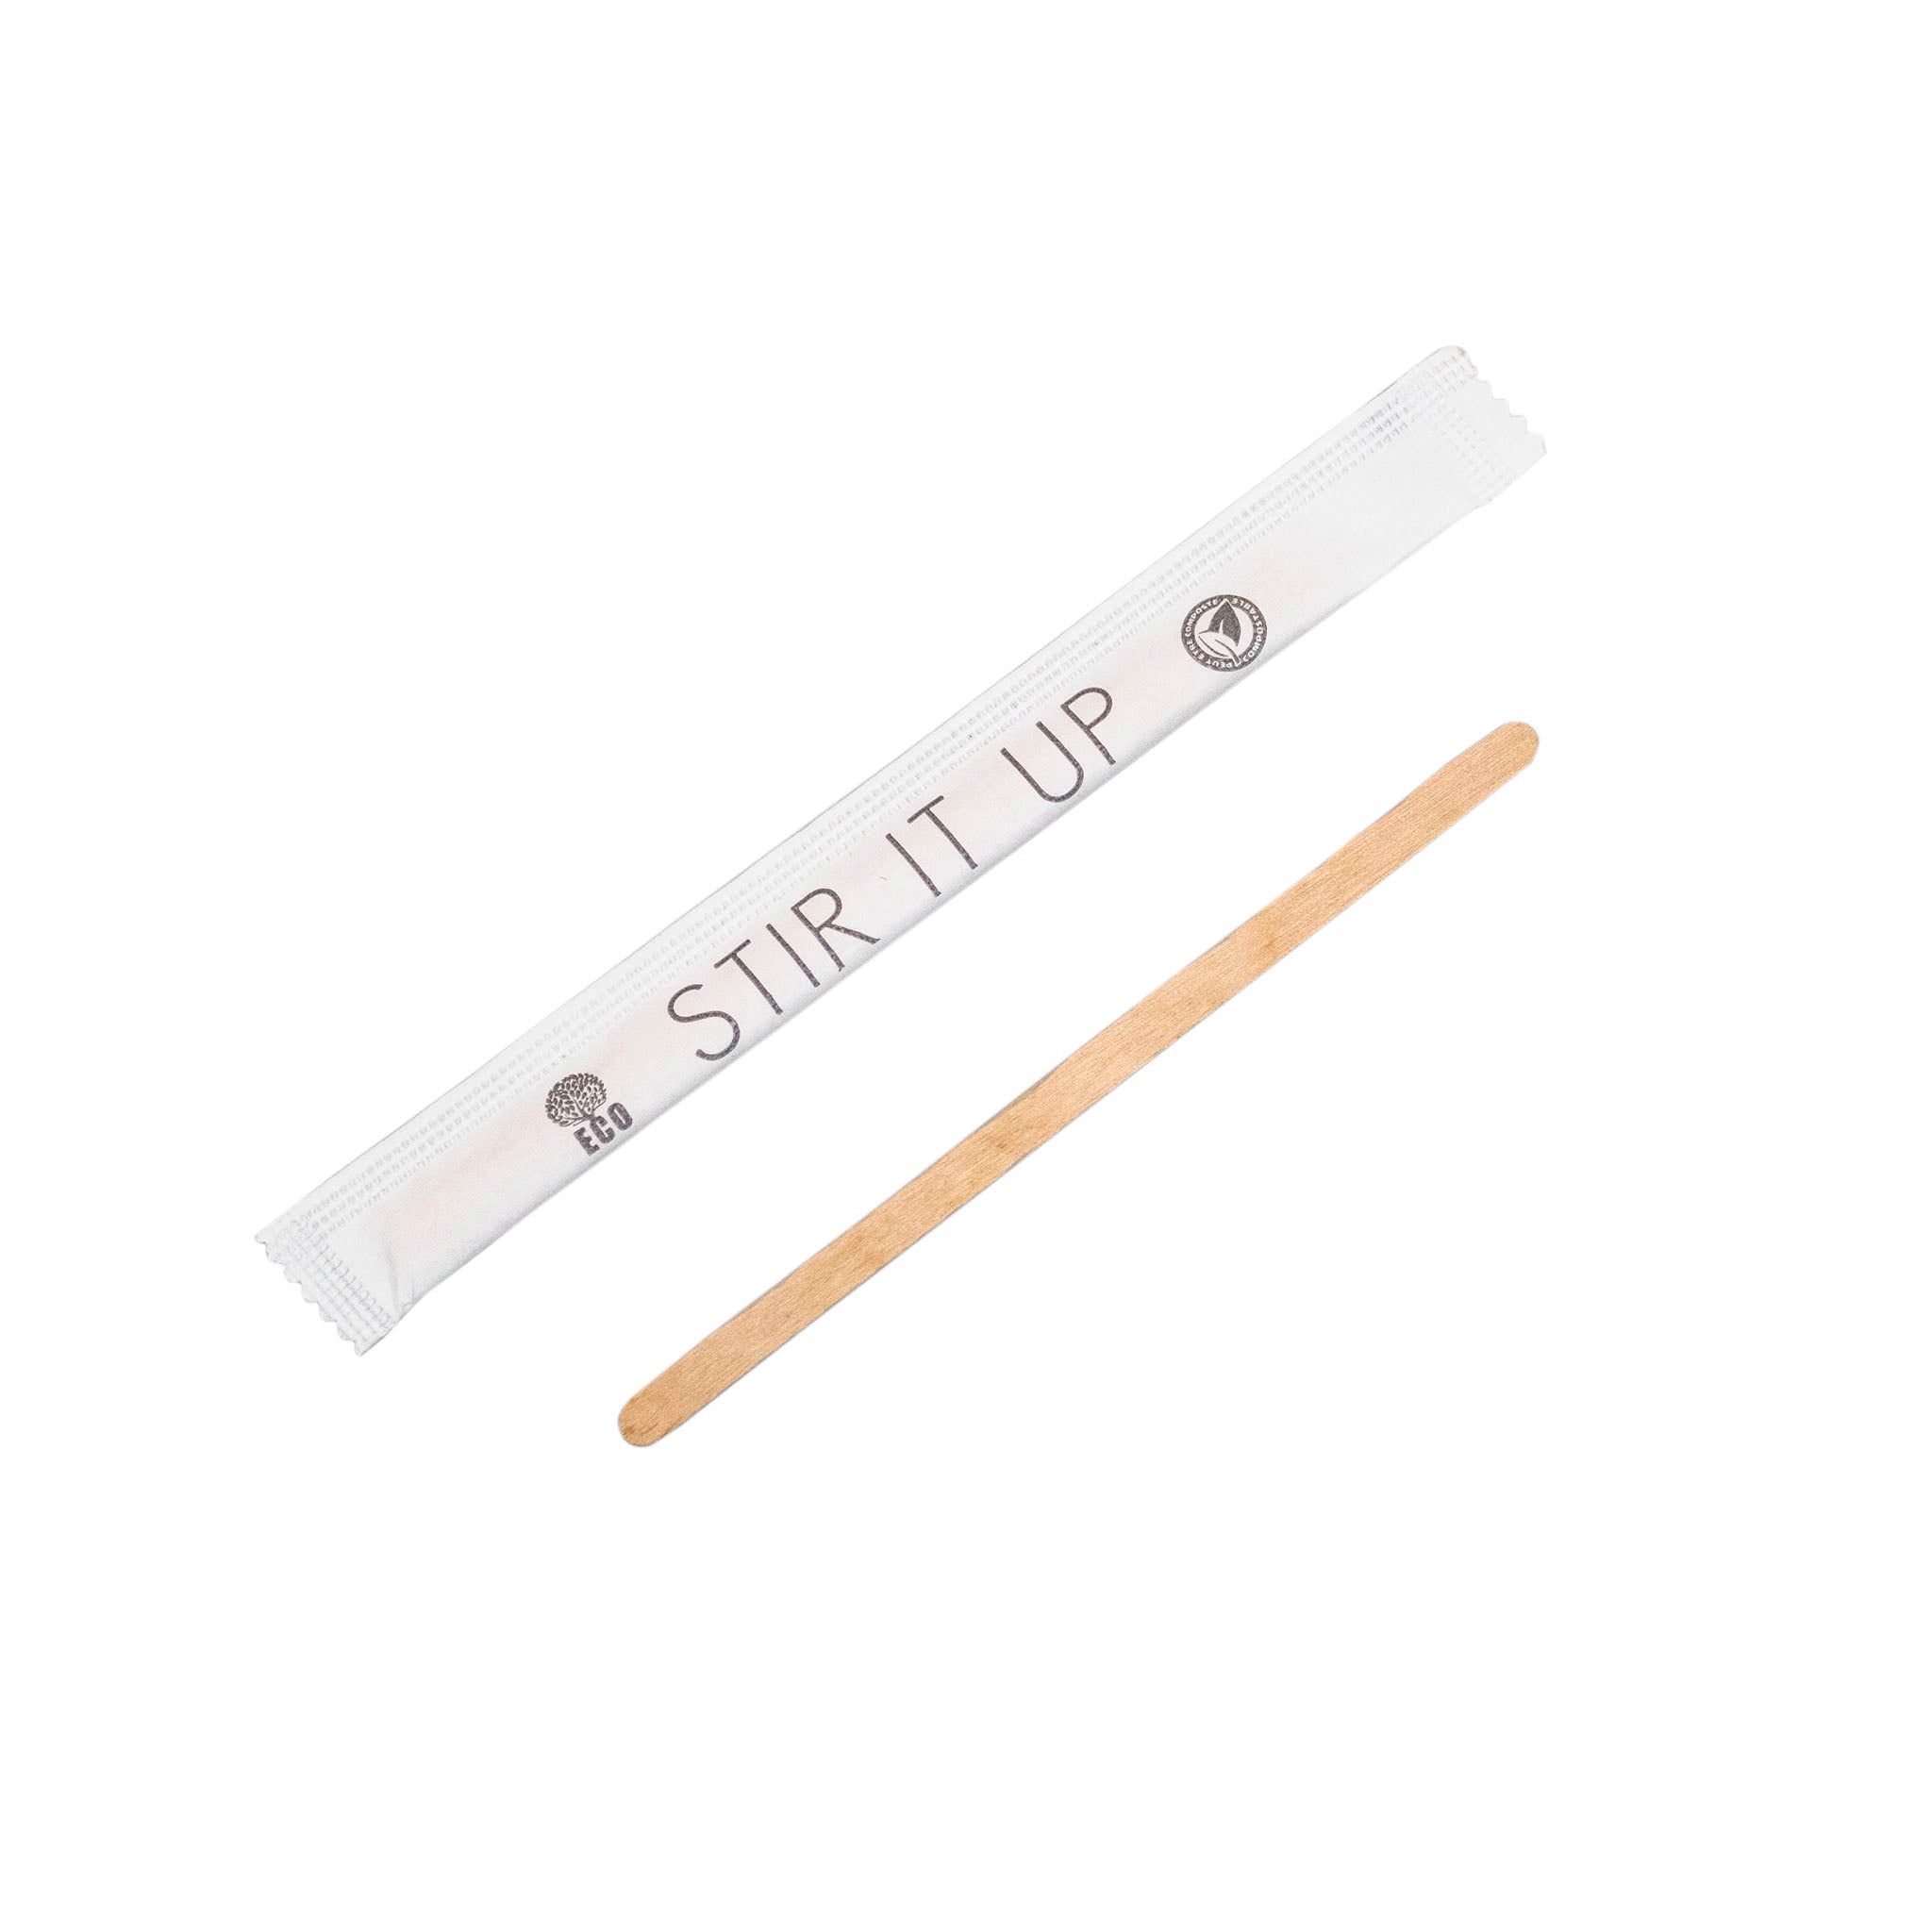 Wrapped Wood Stir Stick – Amenity Services